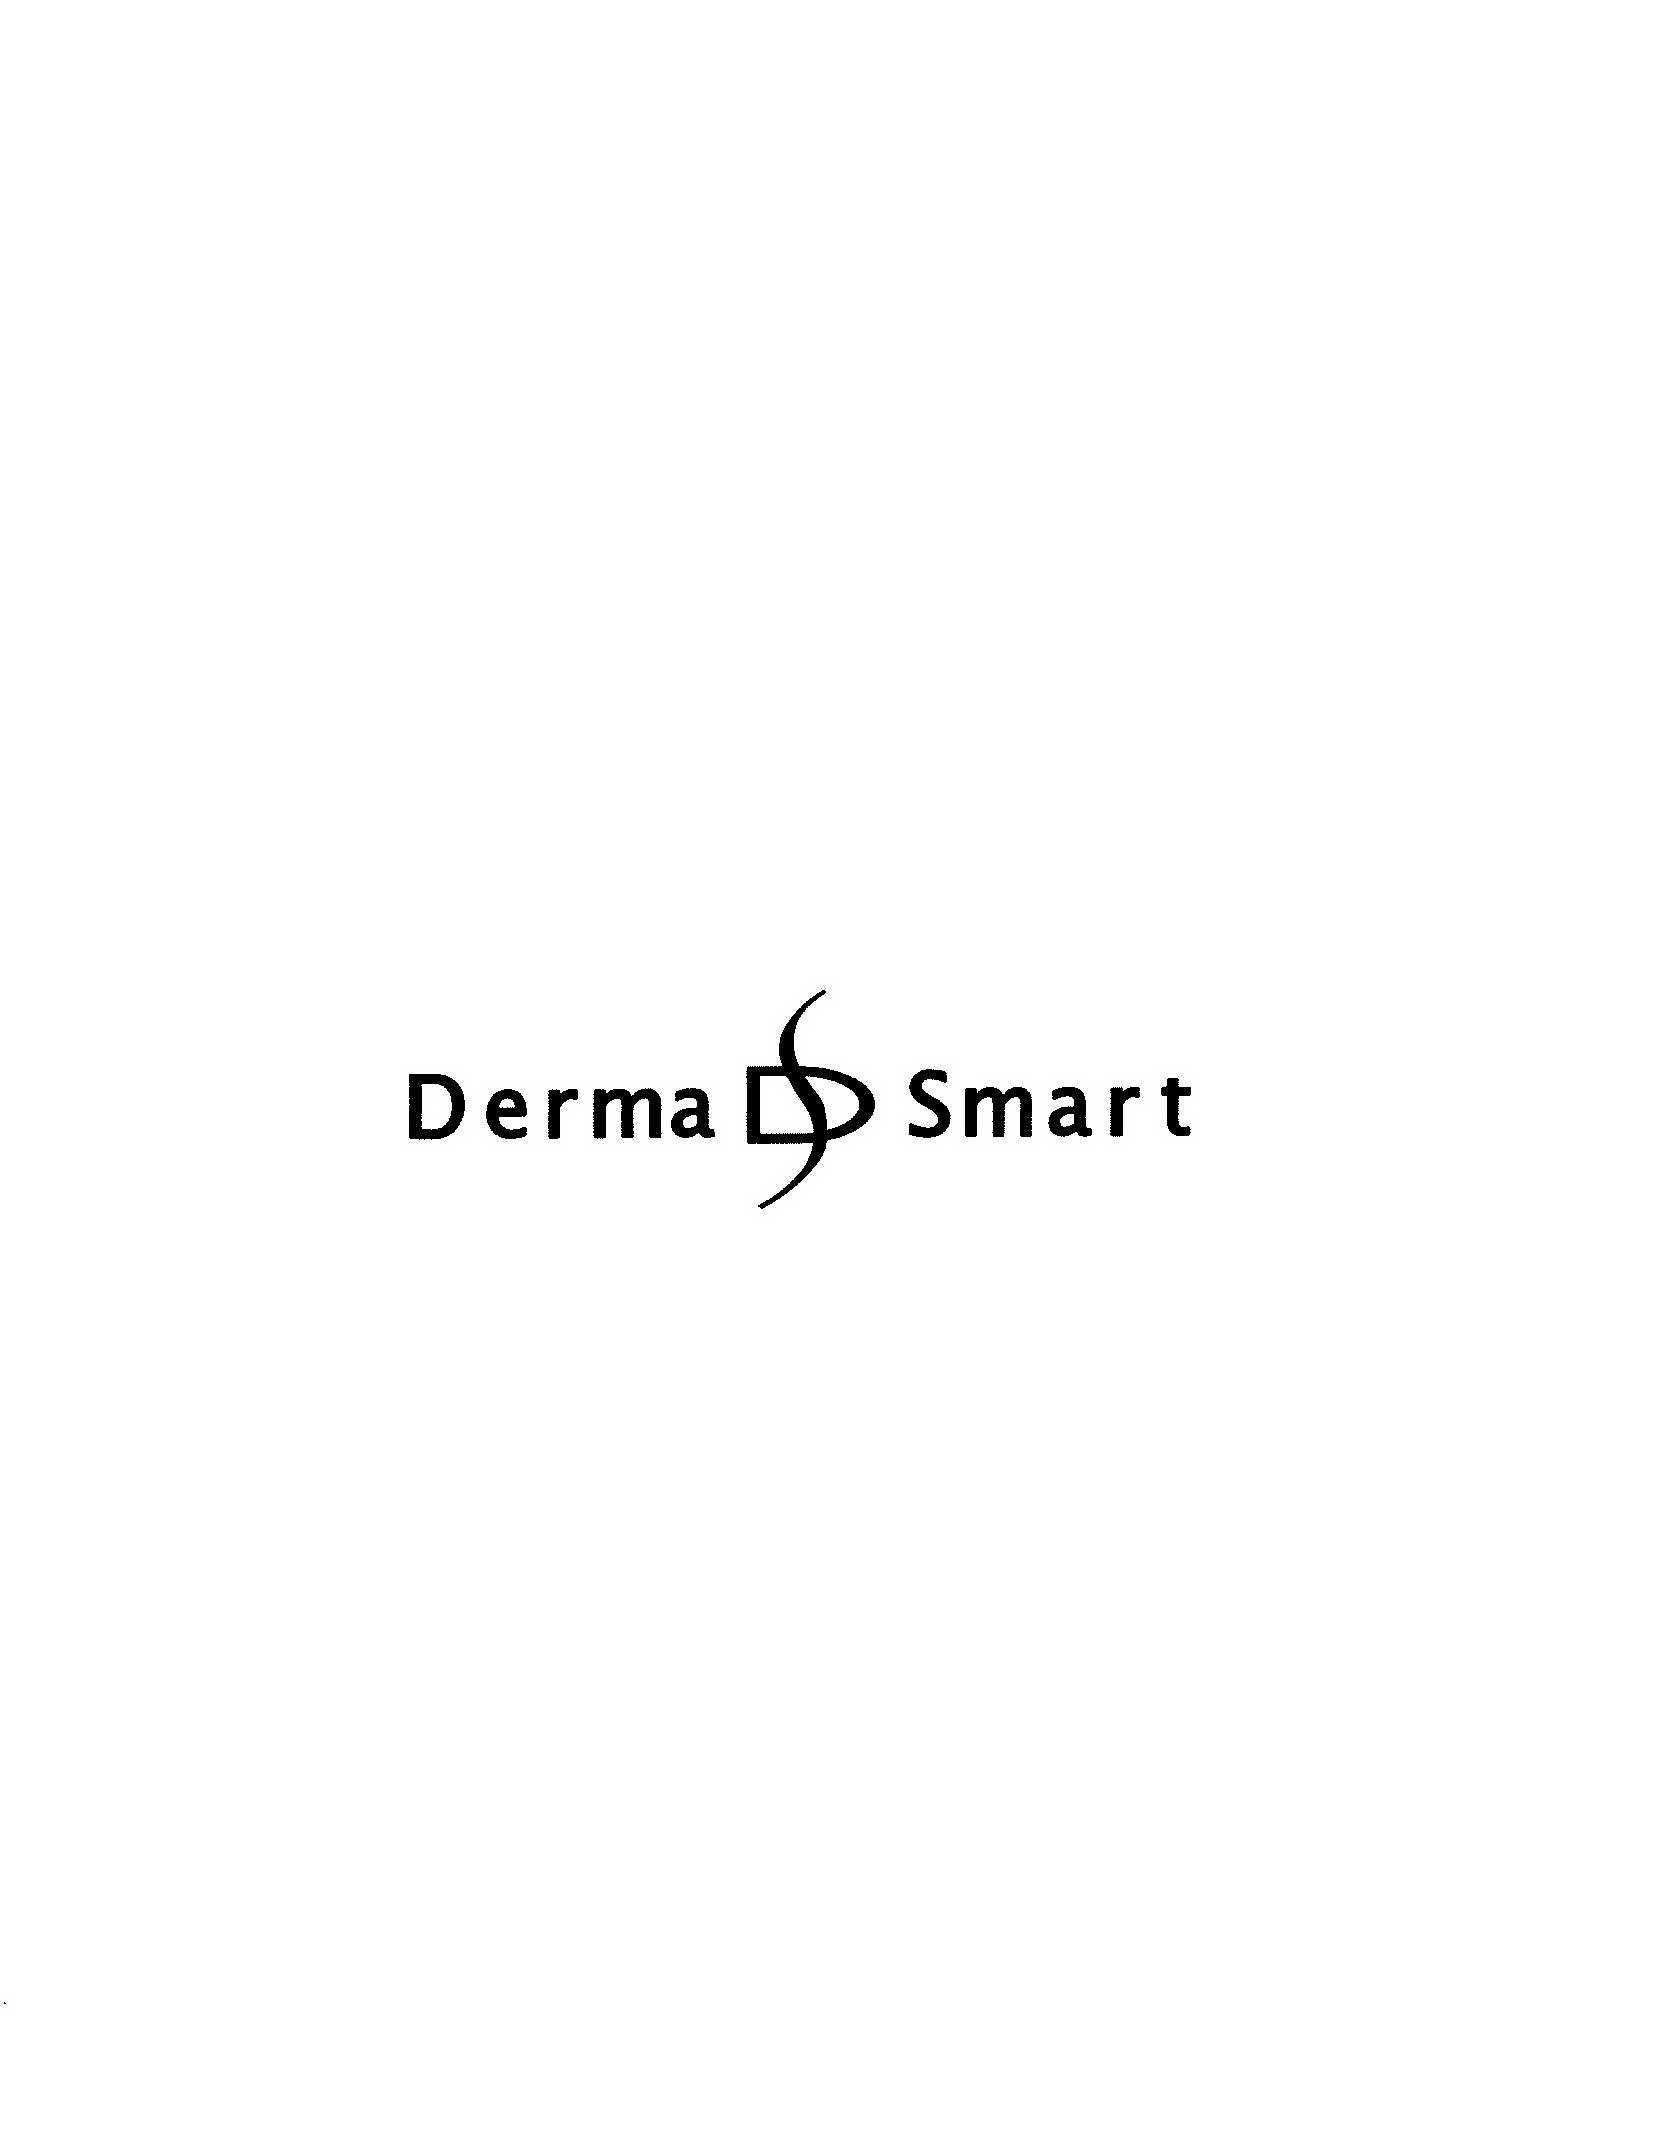  DERMA D SMART